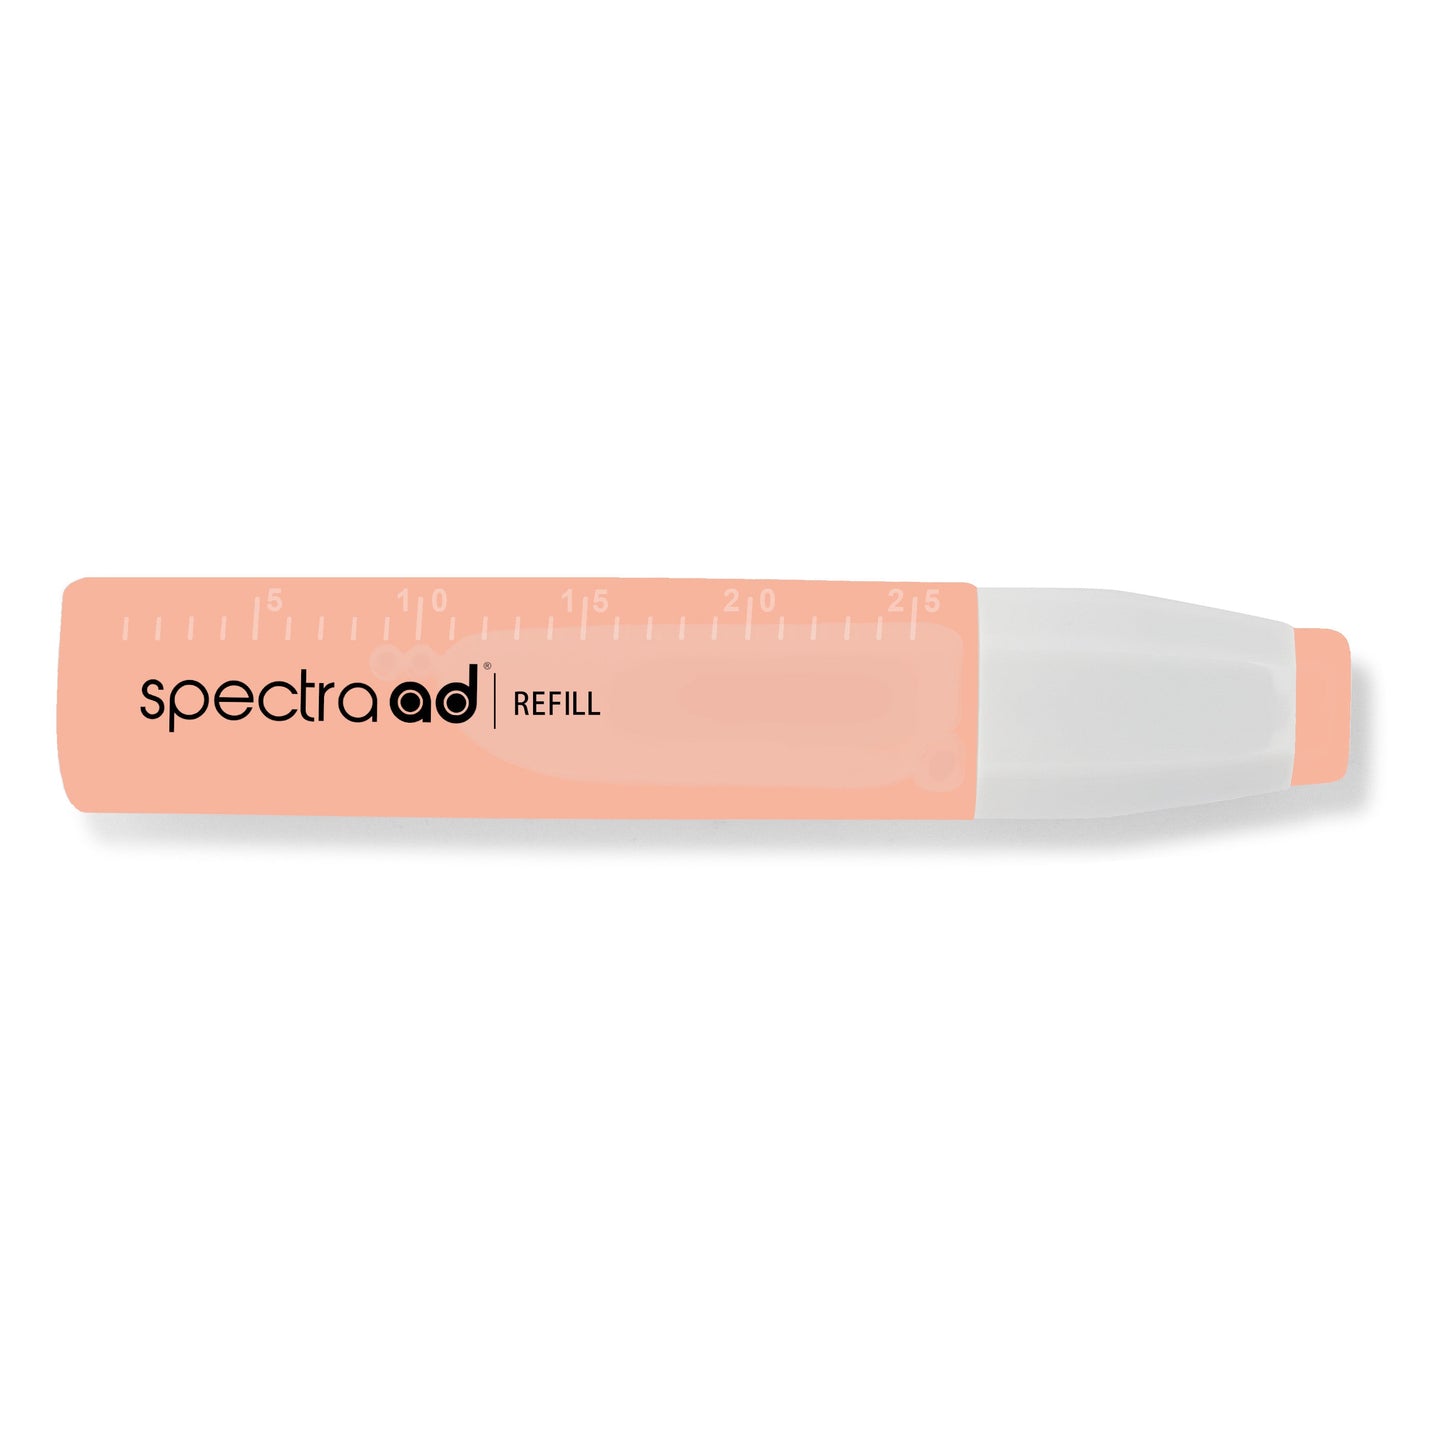 016 - Orange - Spectra AD Refill Bottle